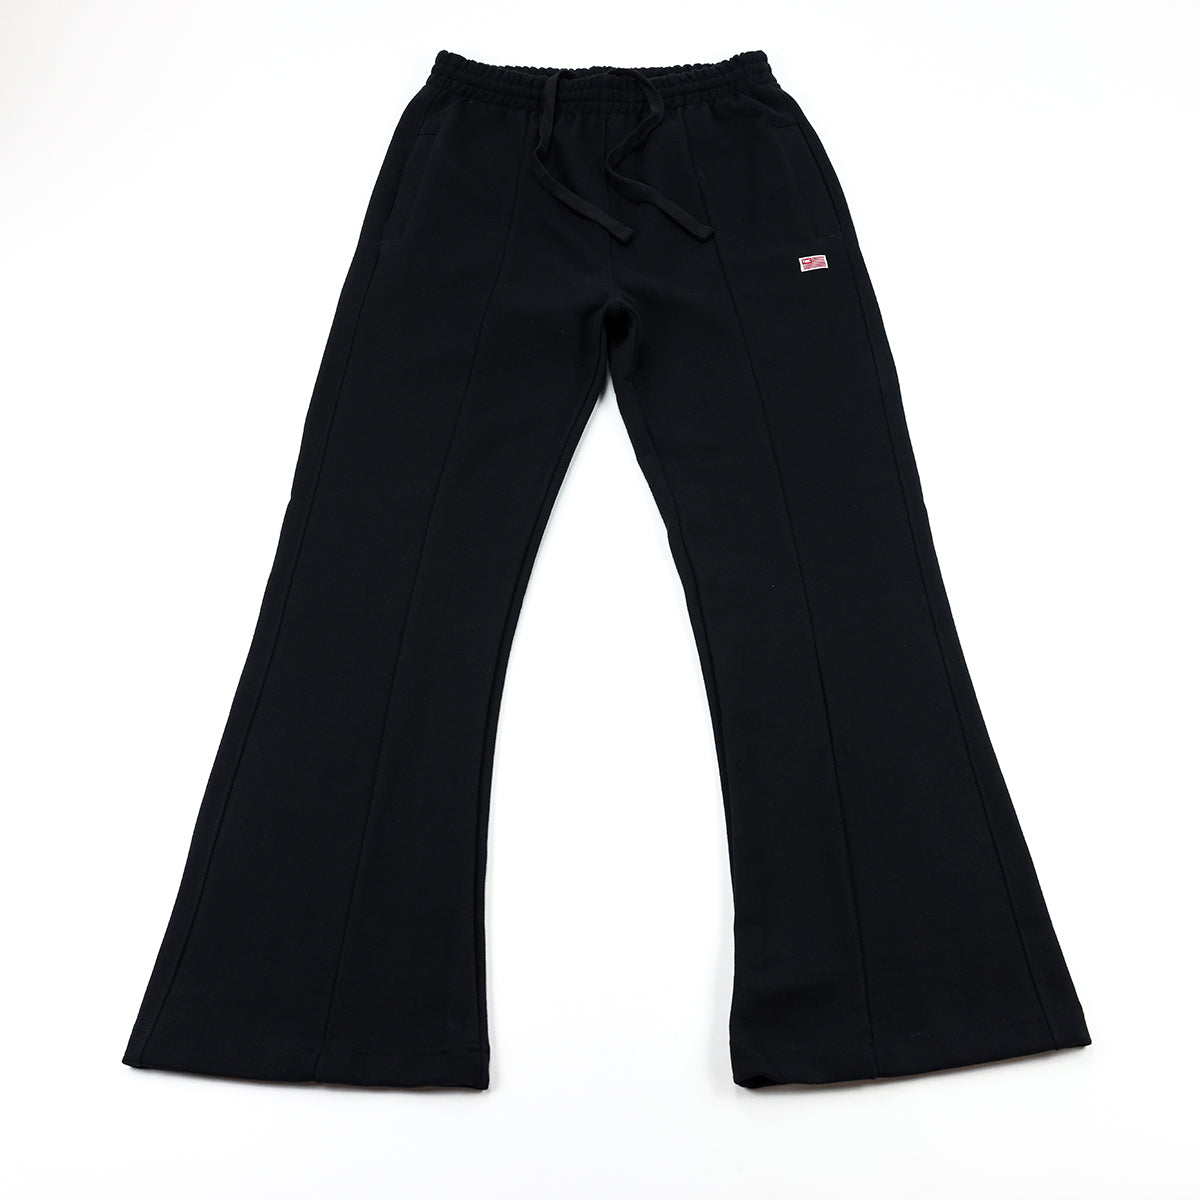 TMC Women's Flare Pants - Black 